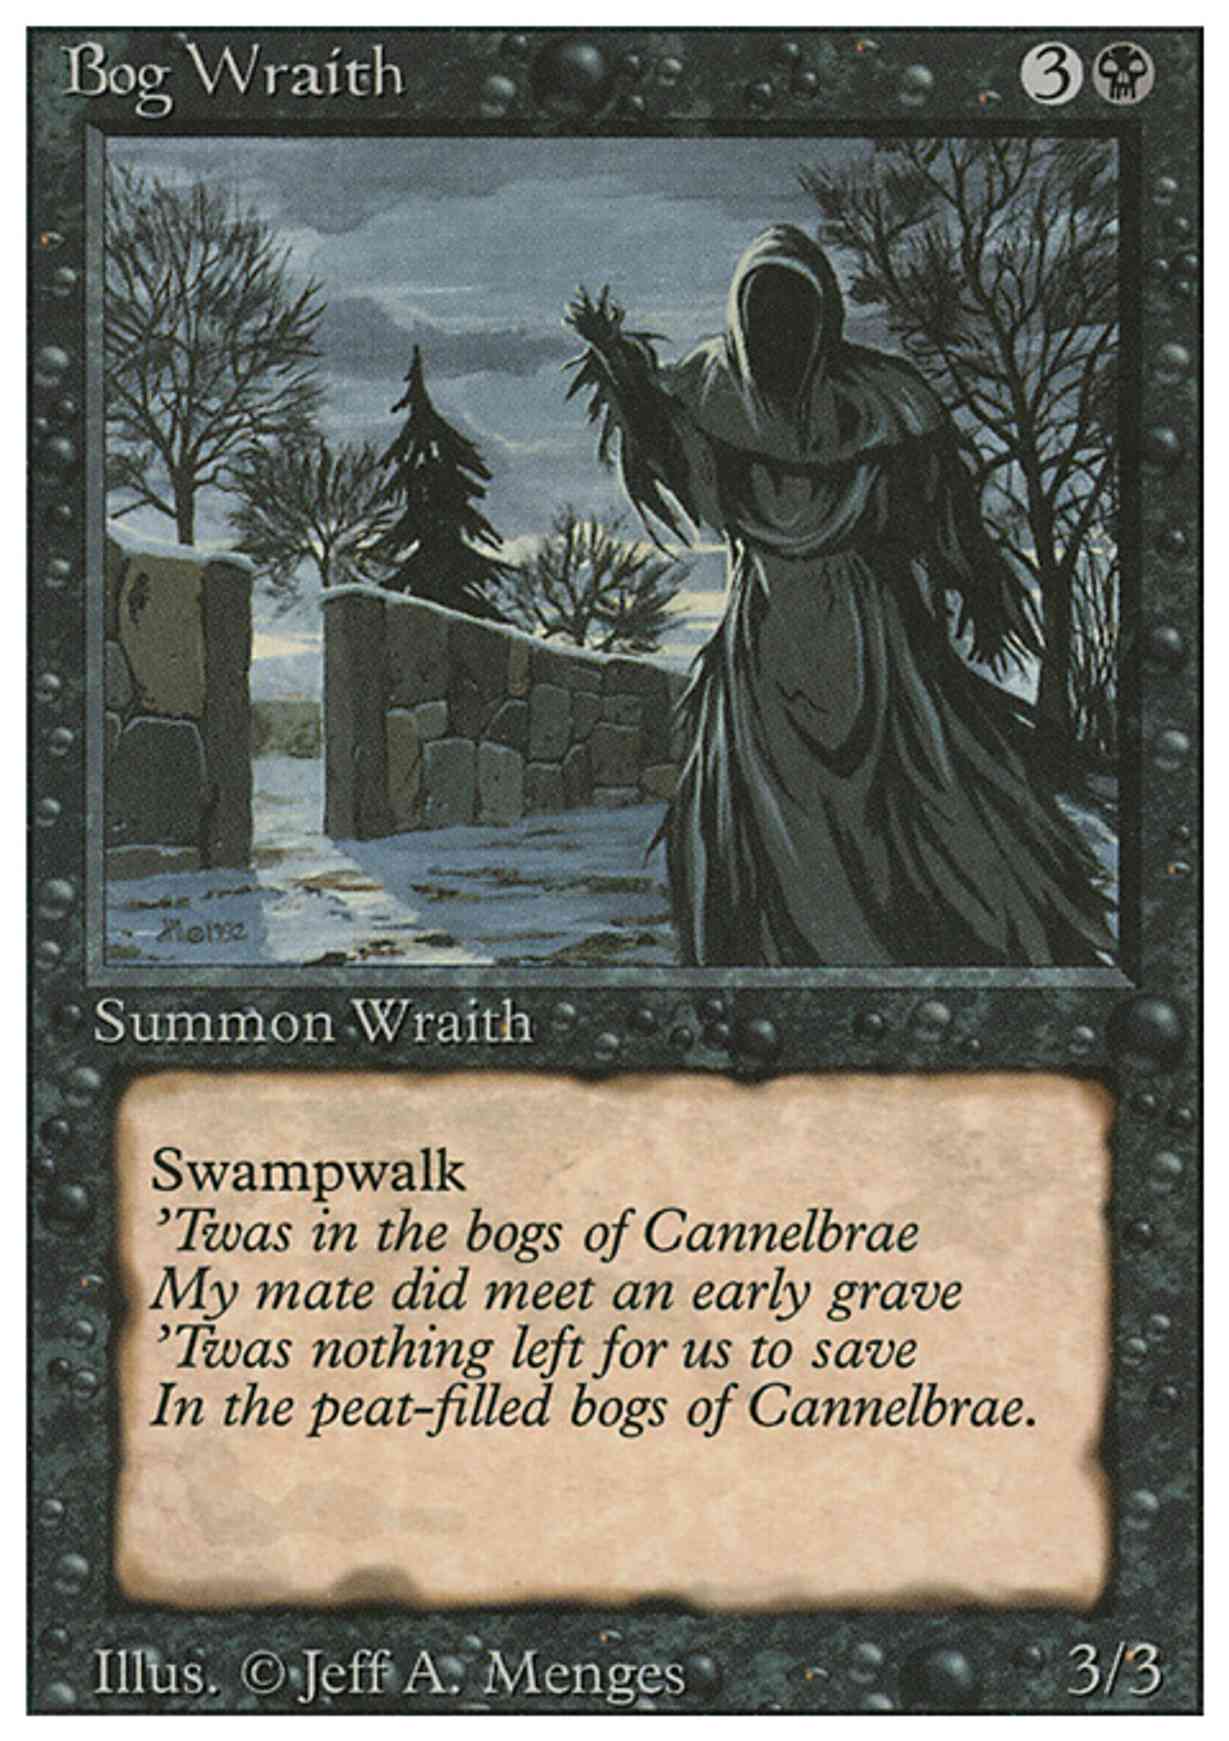 Bog Wraith magic card front